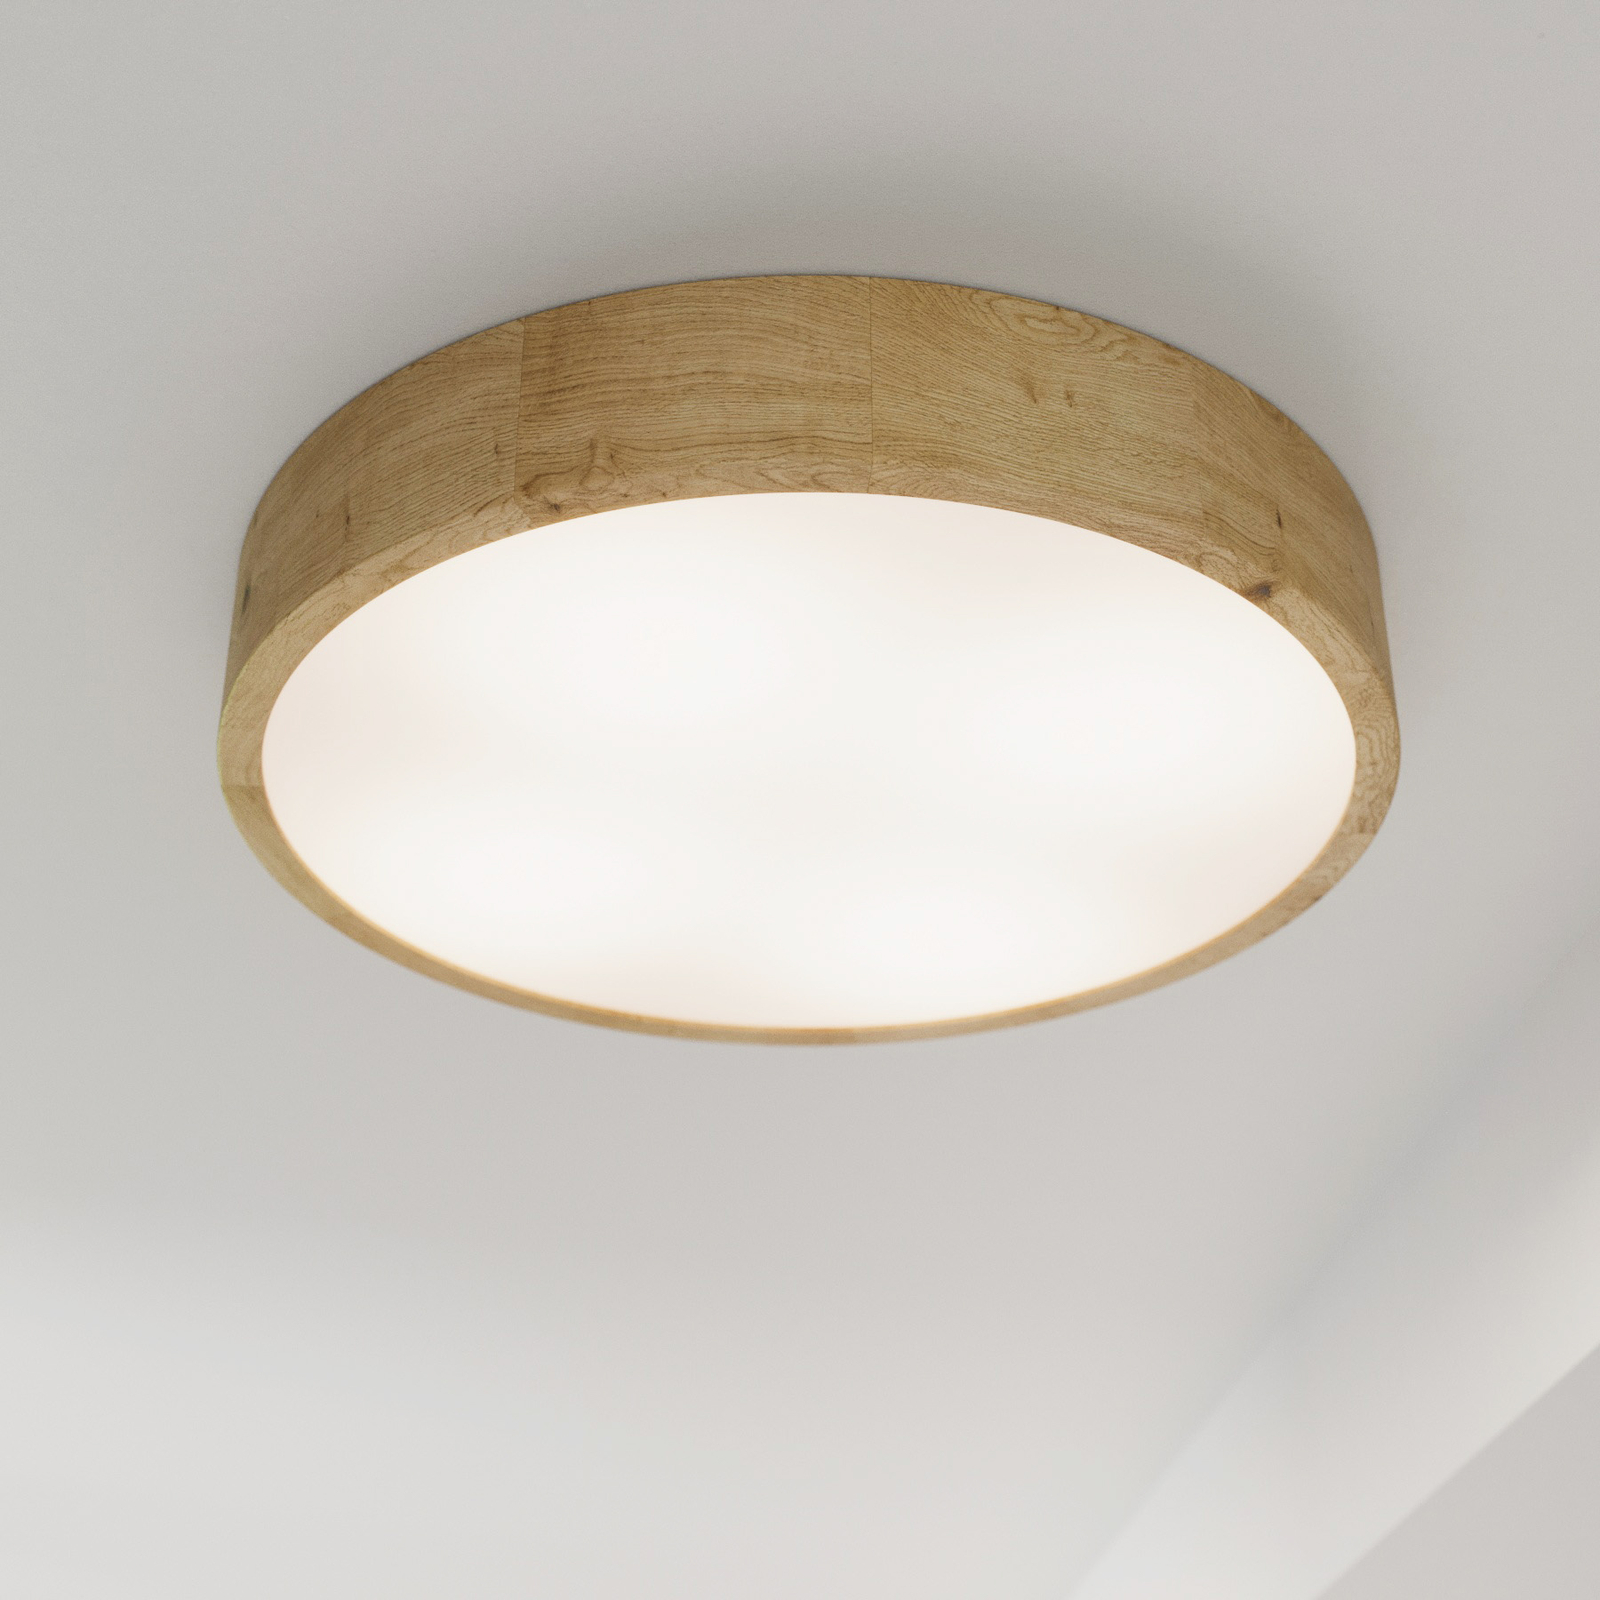 Cleo ceiling light, Ø 48 cm, oak